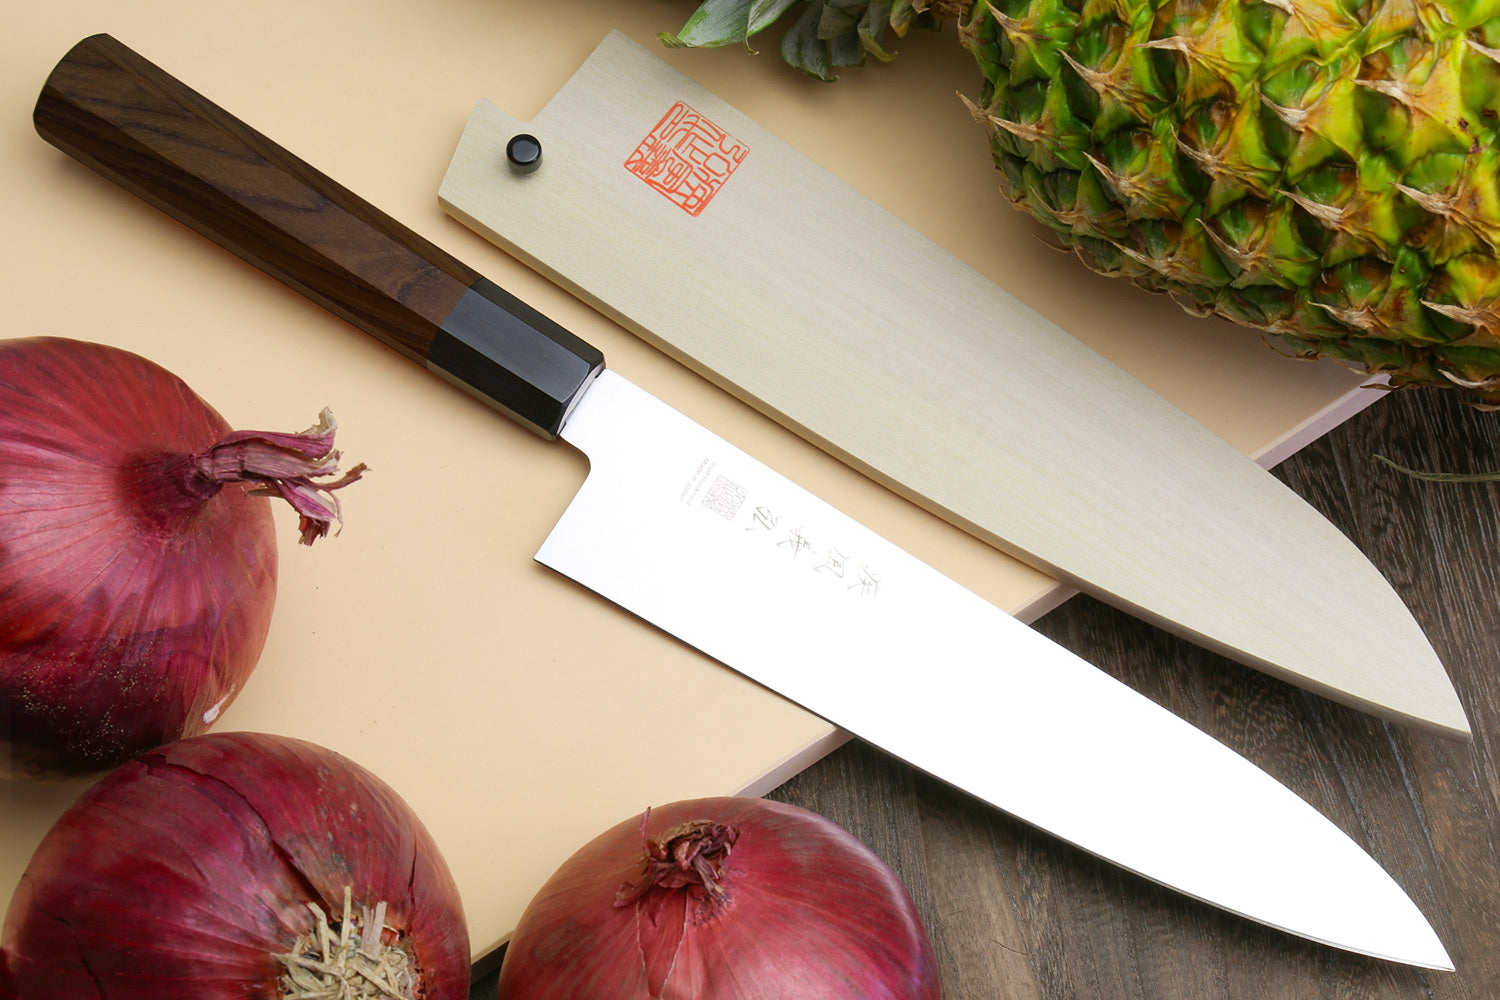 Yoshi Blade Zirconia Ceramic Kitchen Knives-Utility Knife - China